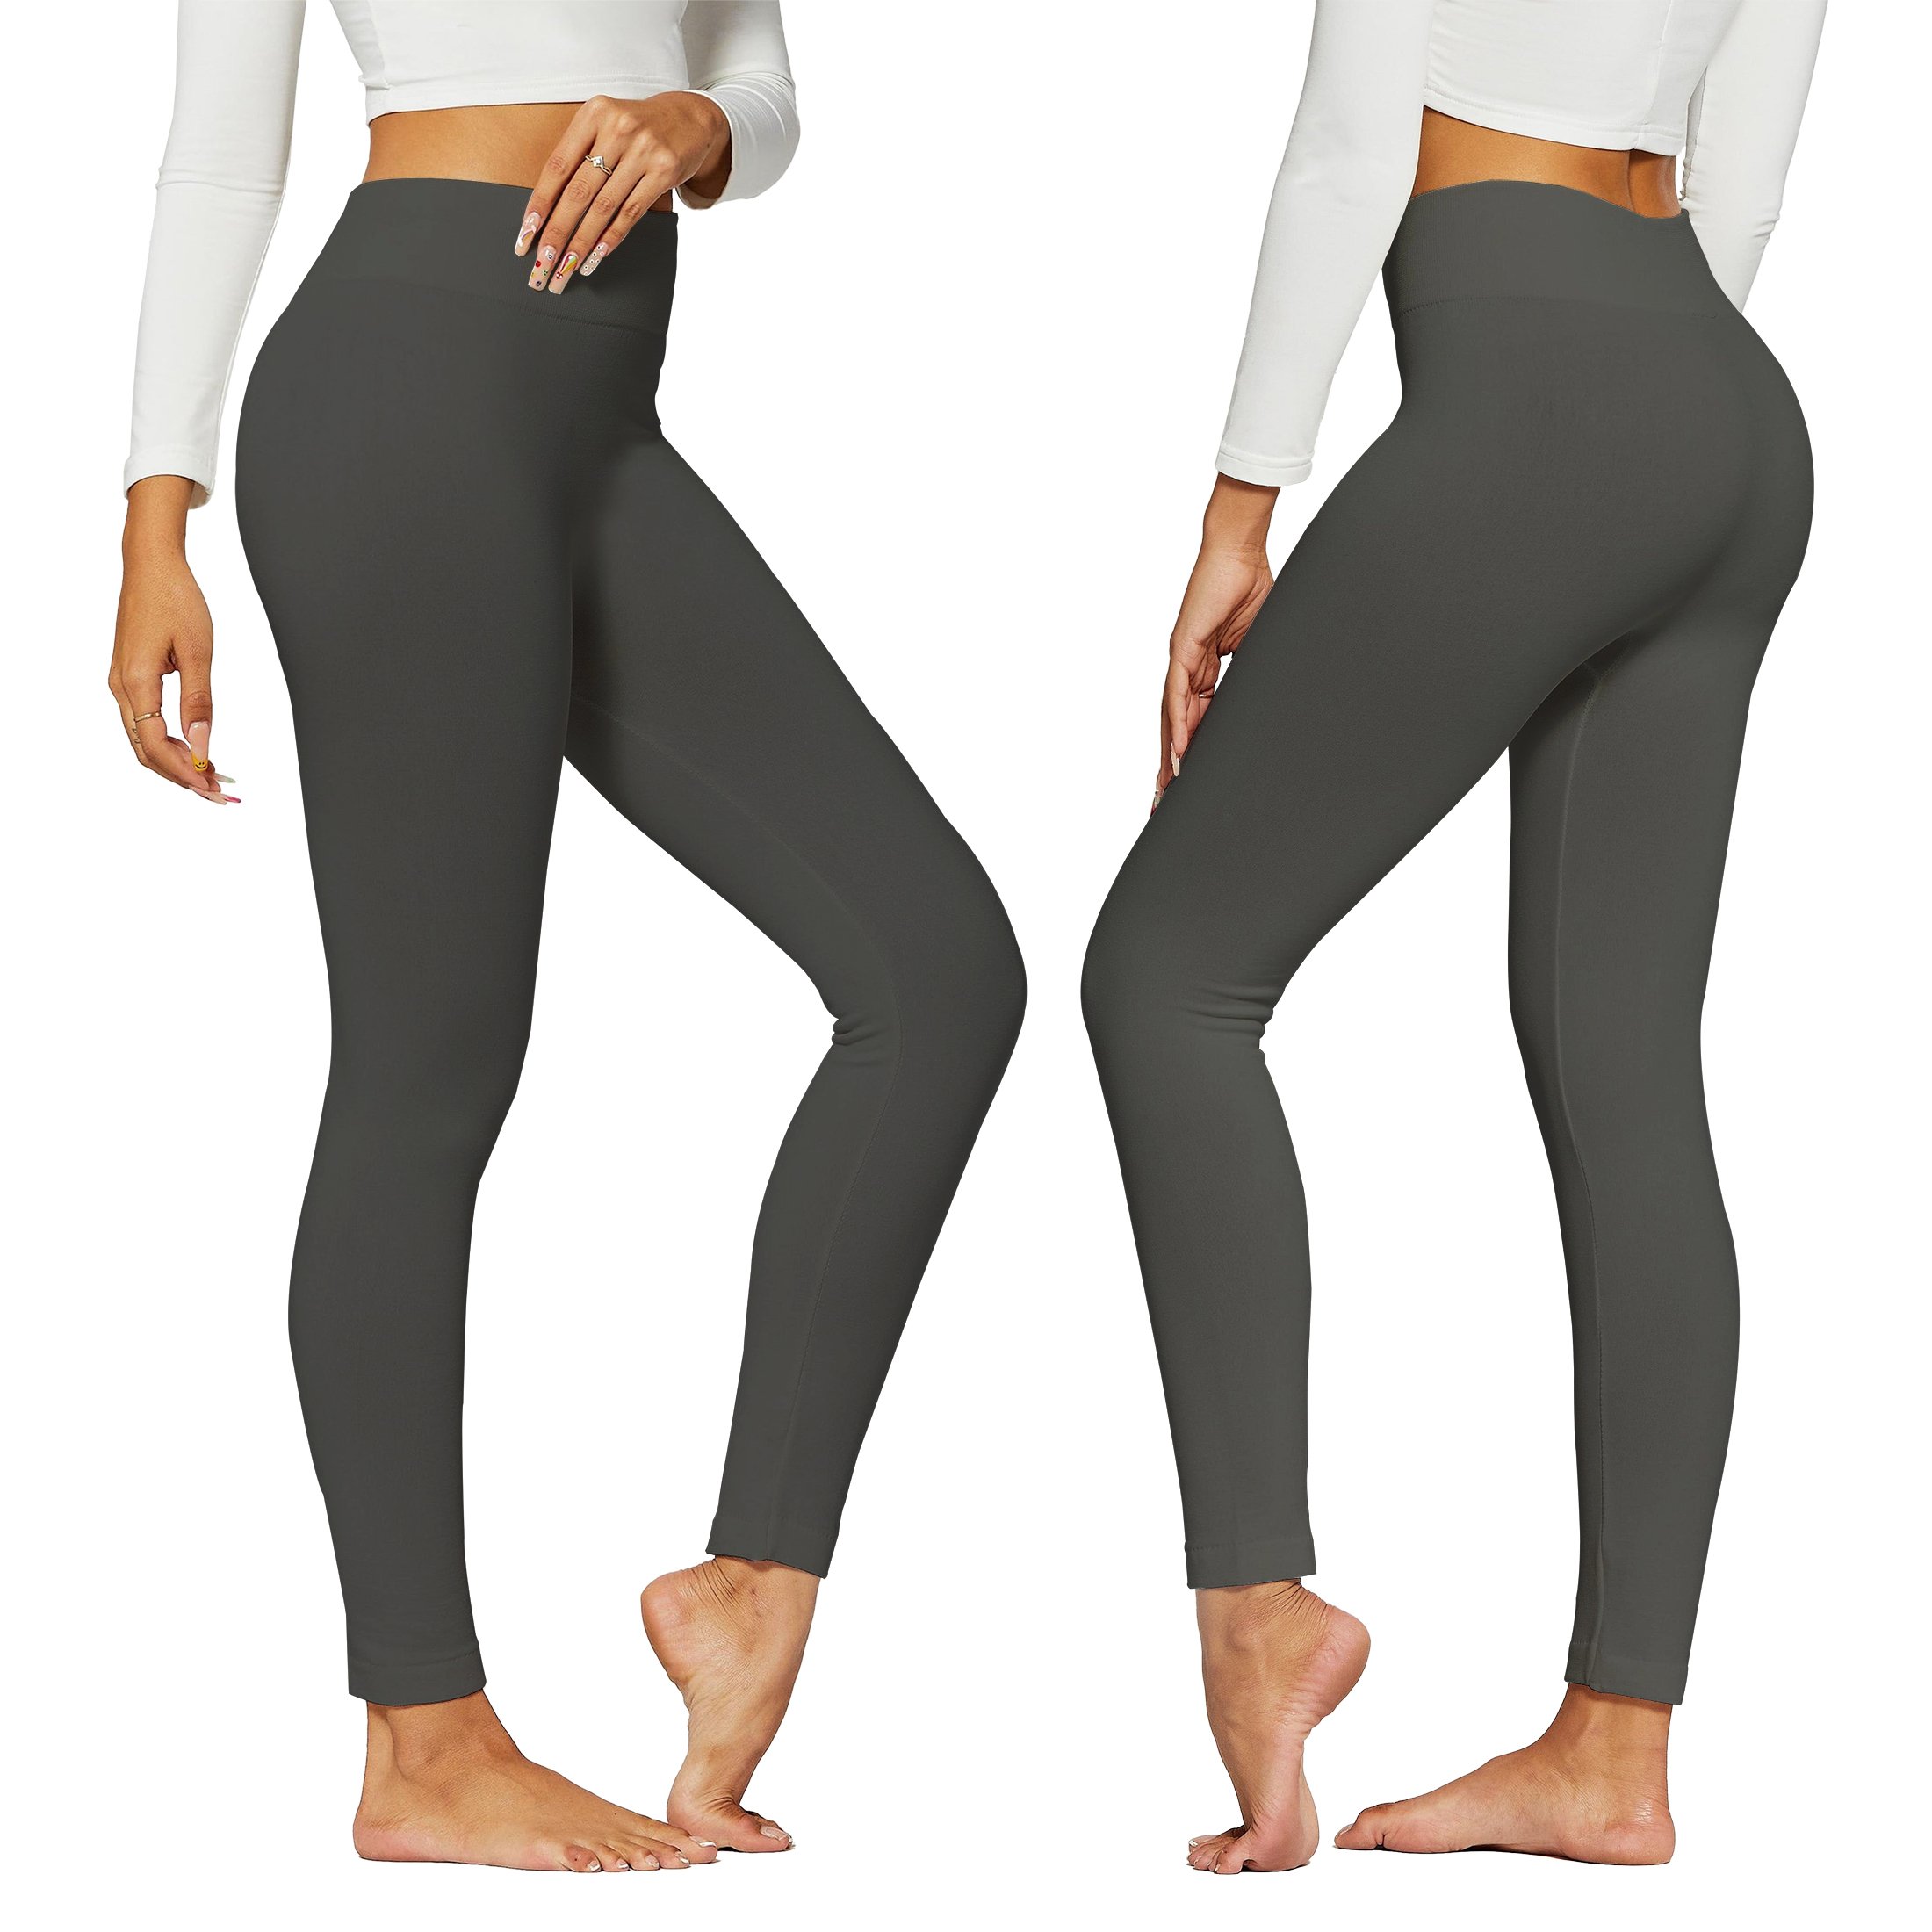 Women's Premium Quality High-Waist Fleece Lined Leggings (S-4X) - Grey, 3X/4X